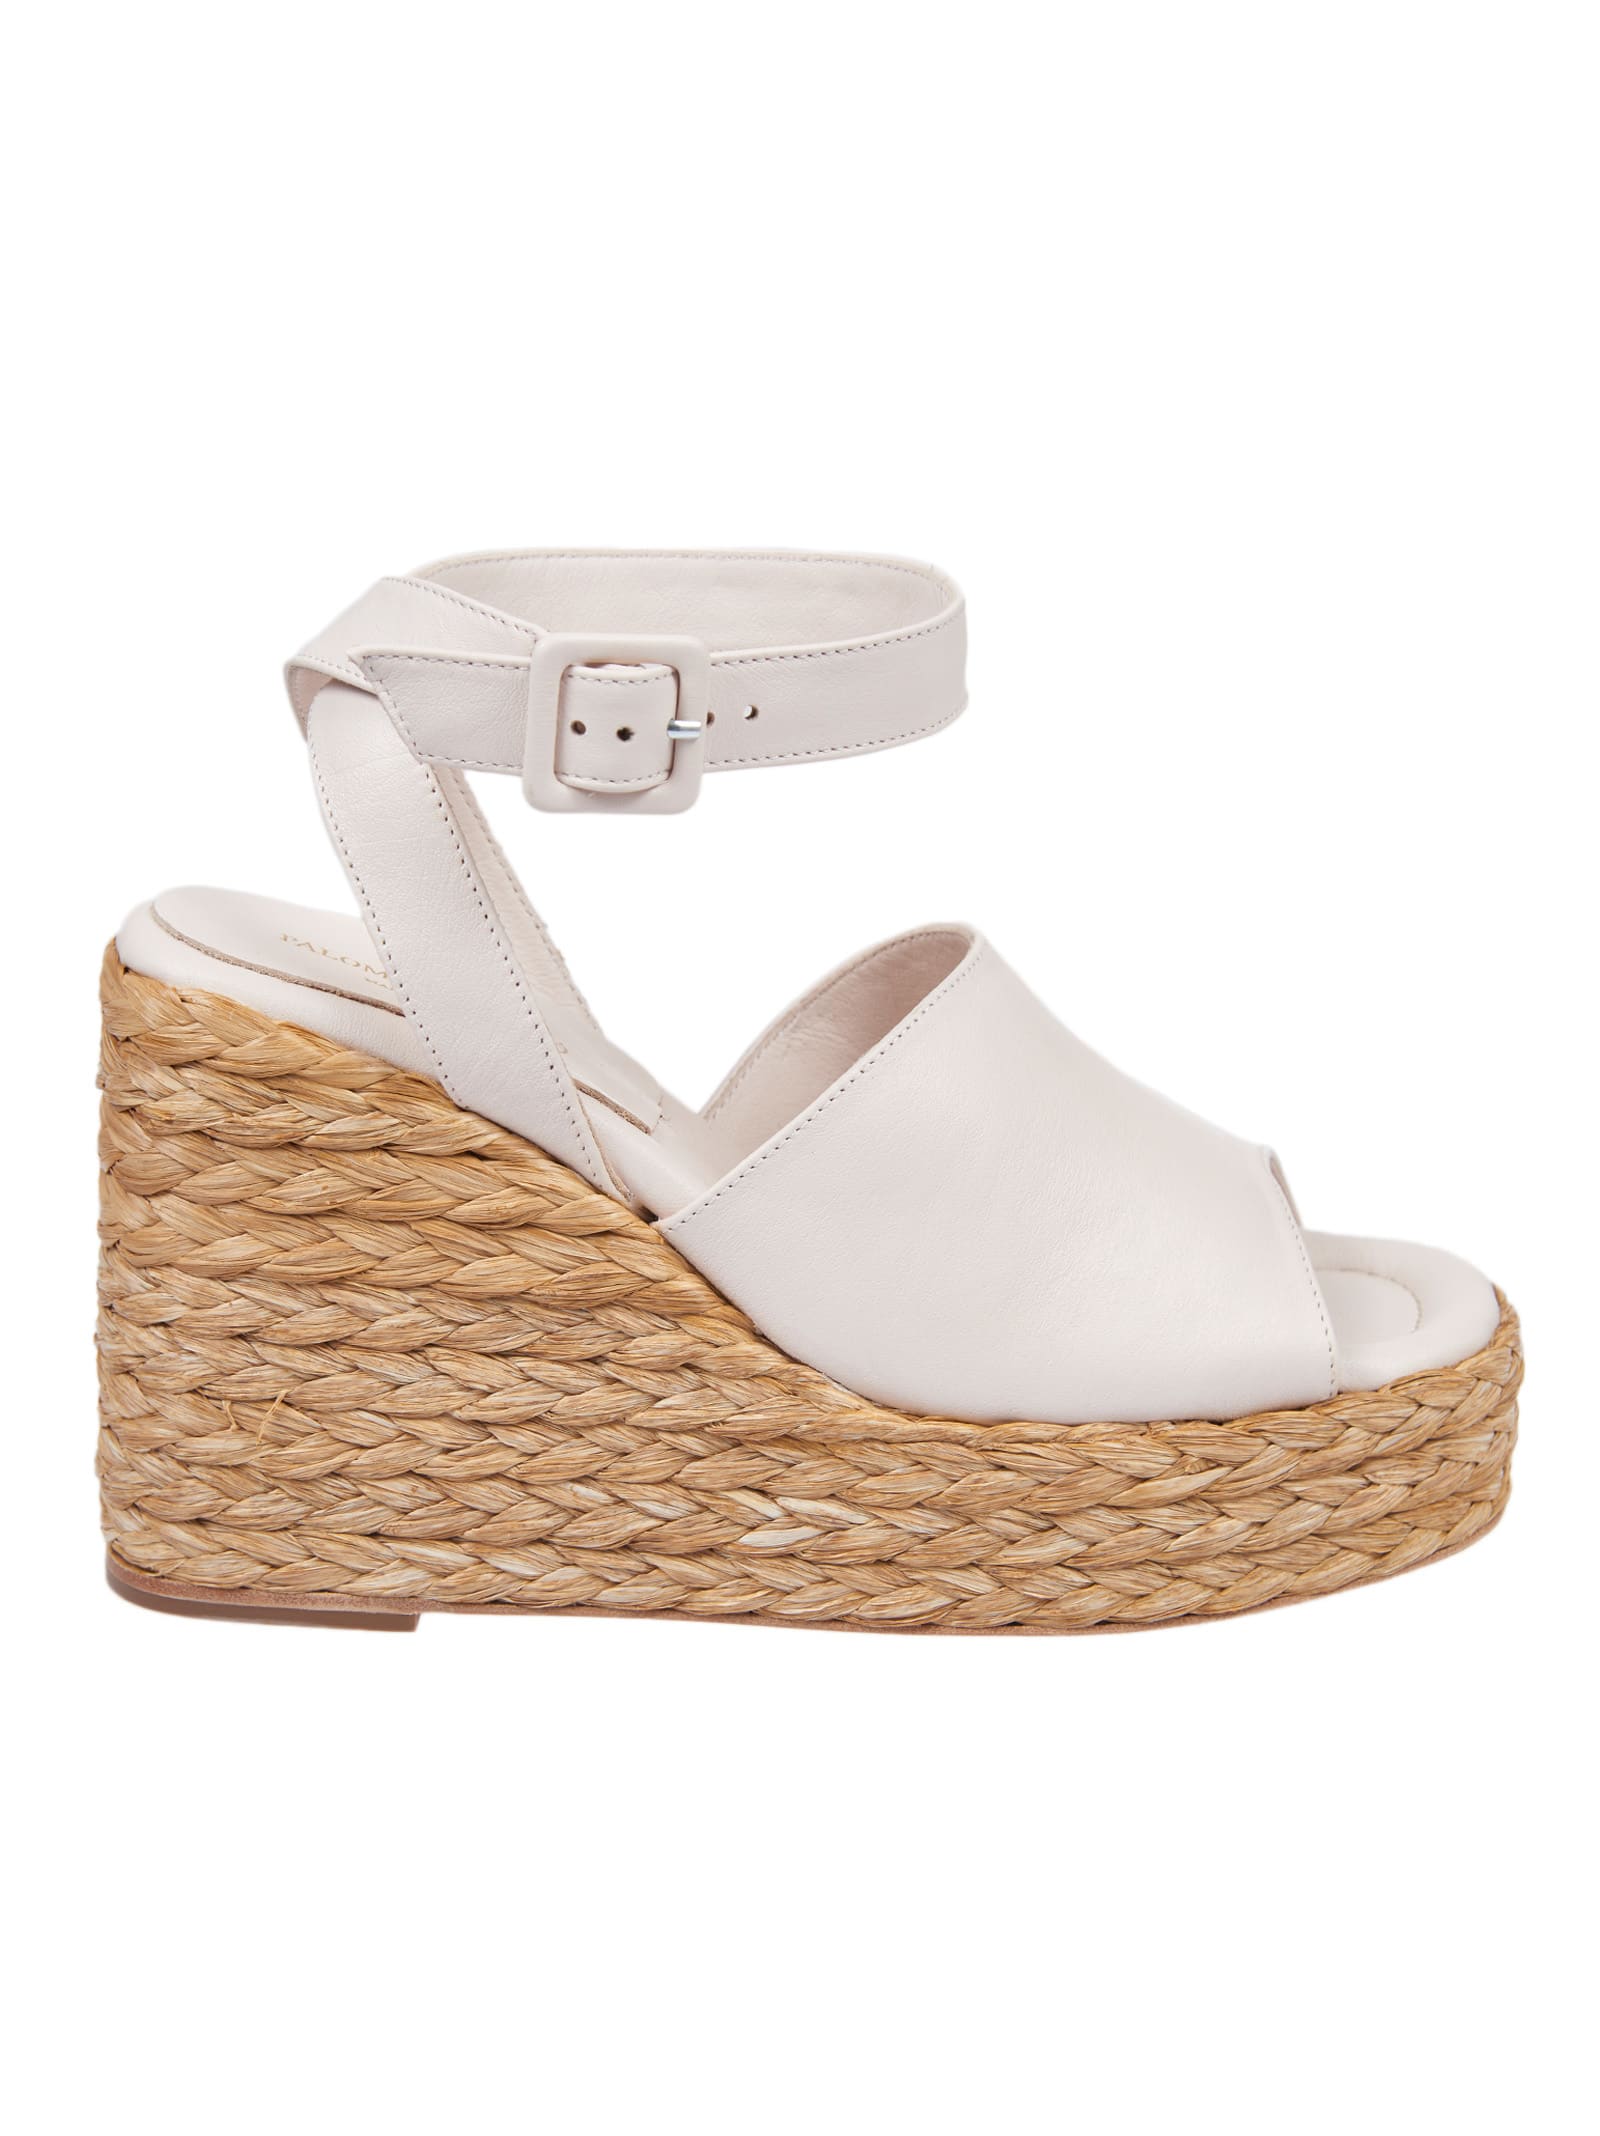 Paloma Barceló White Clama Sandals